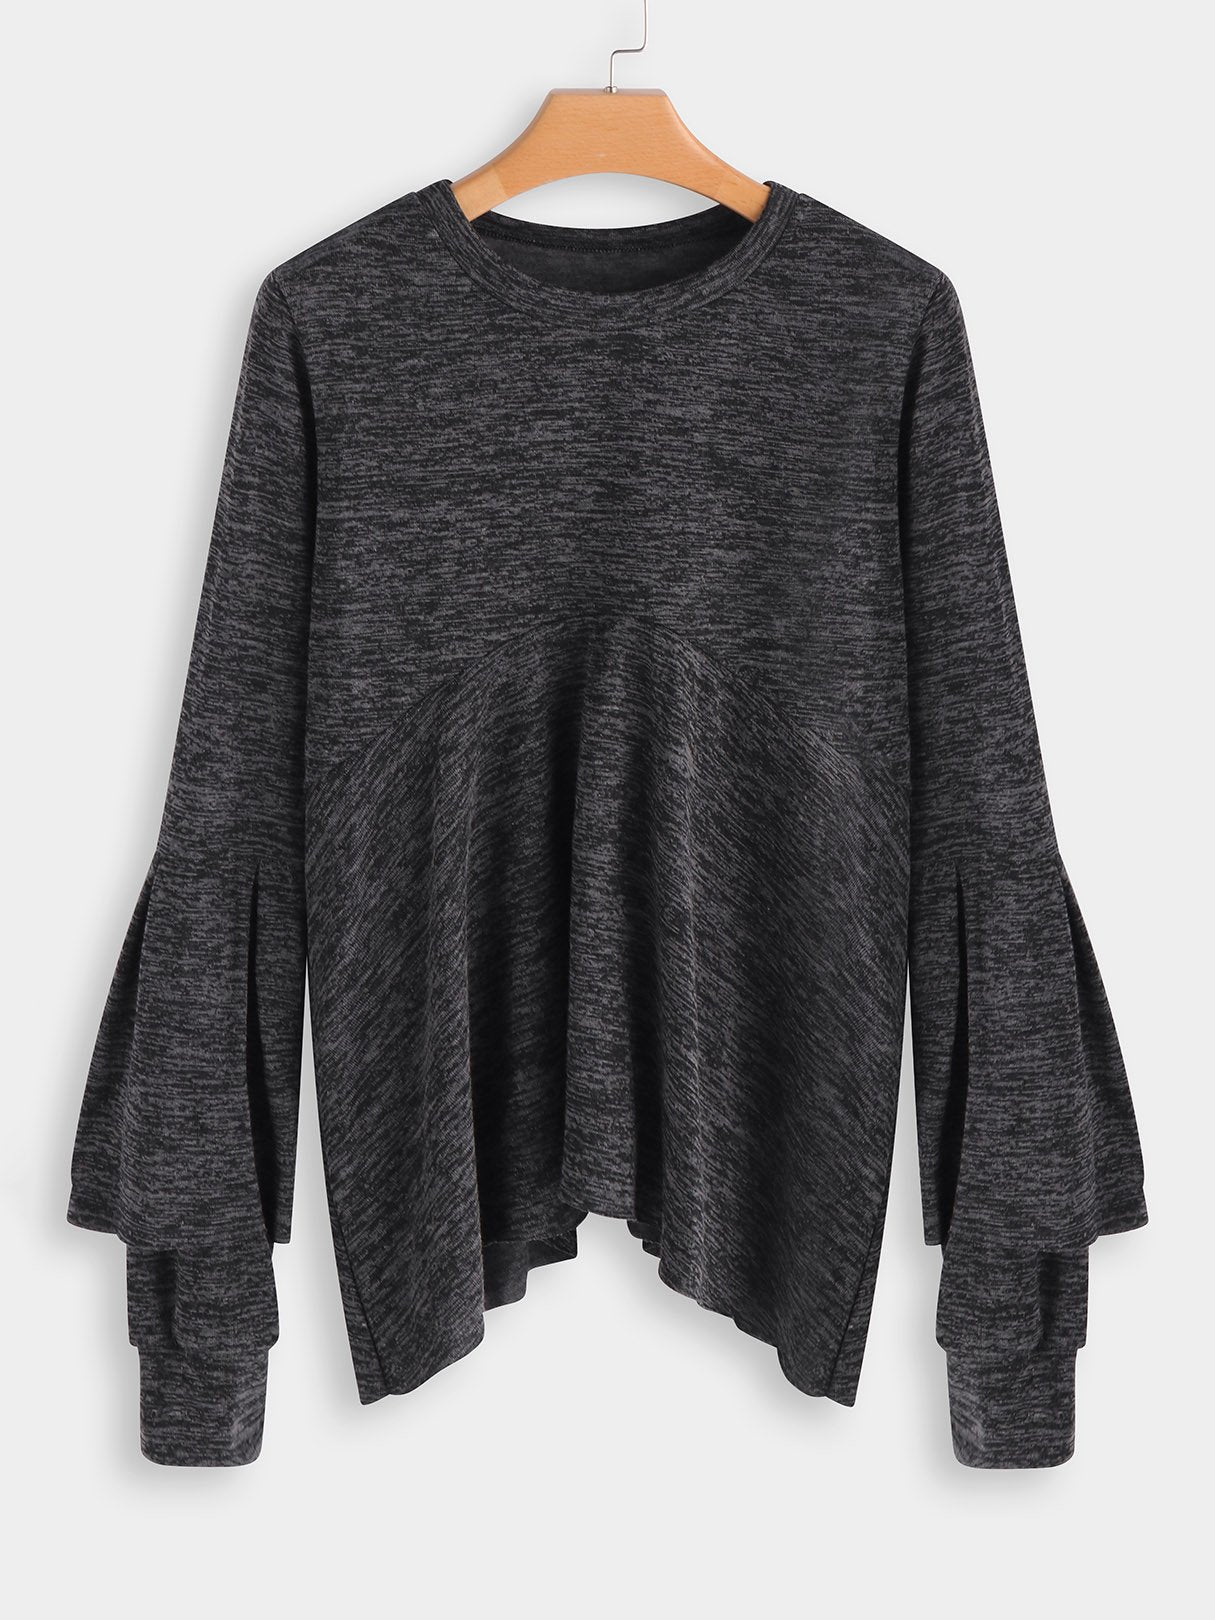 Wholesale Round Neck Long Sleeve Dark Grey T-Shirts